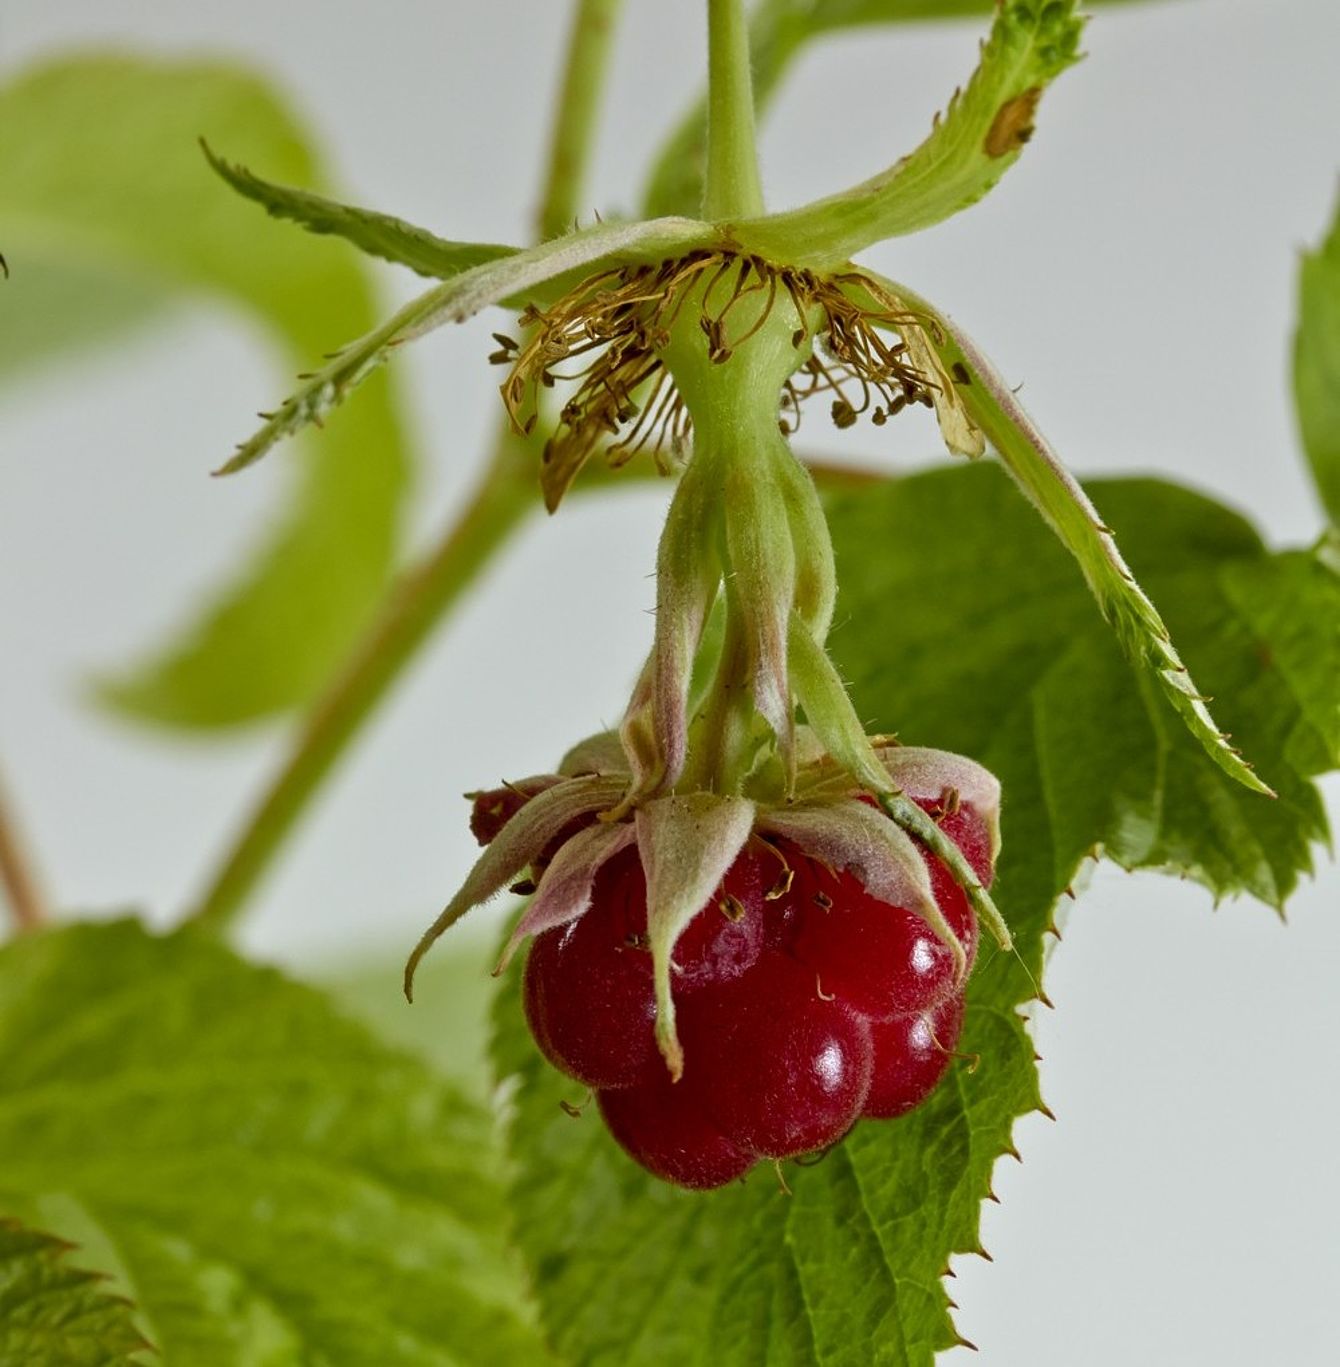 Rubus stunt symptoms on raspberries